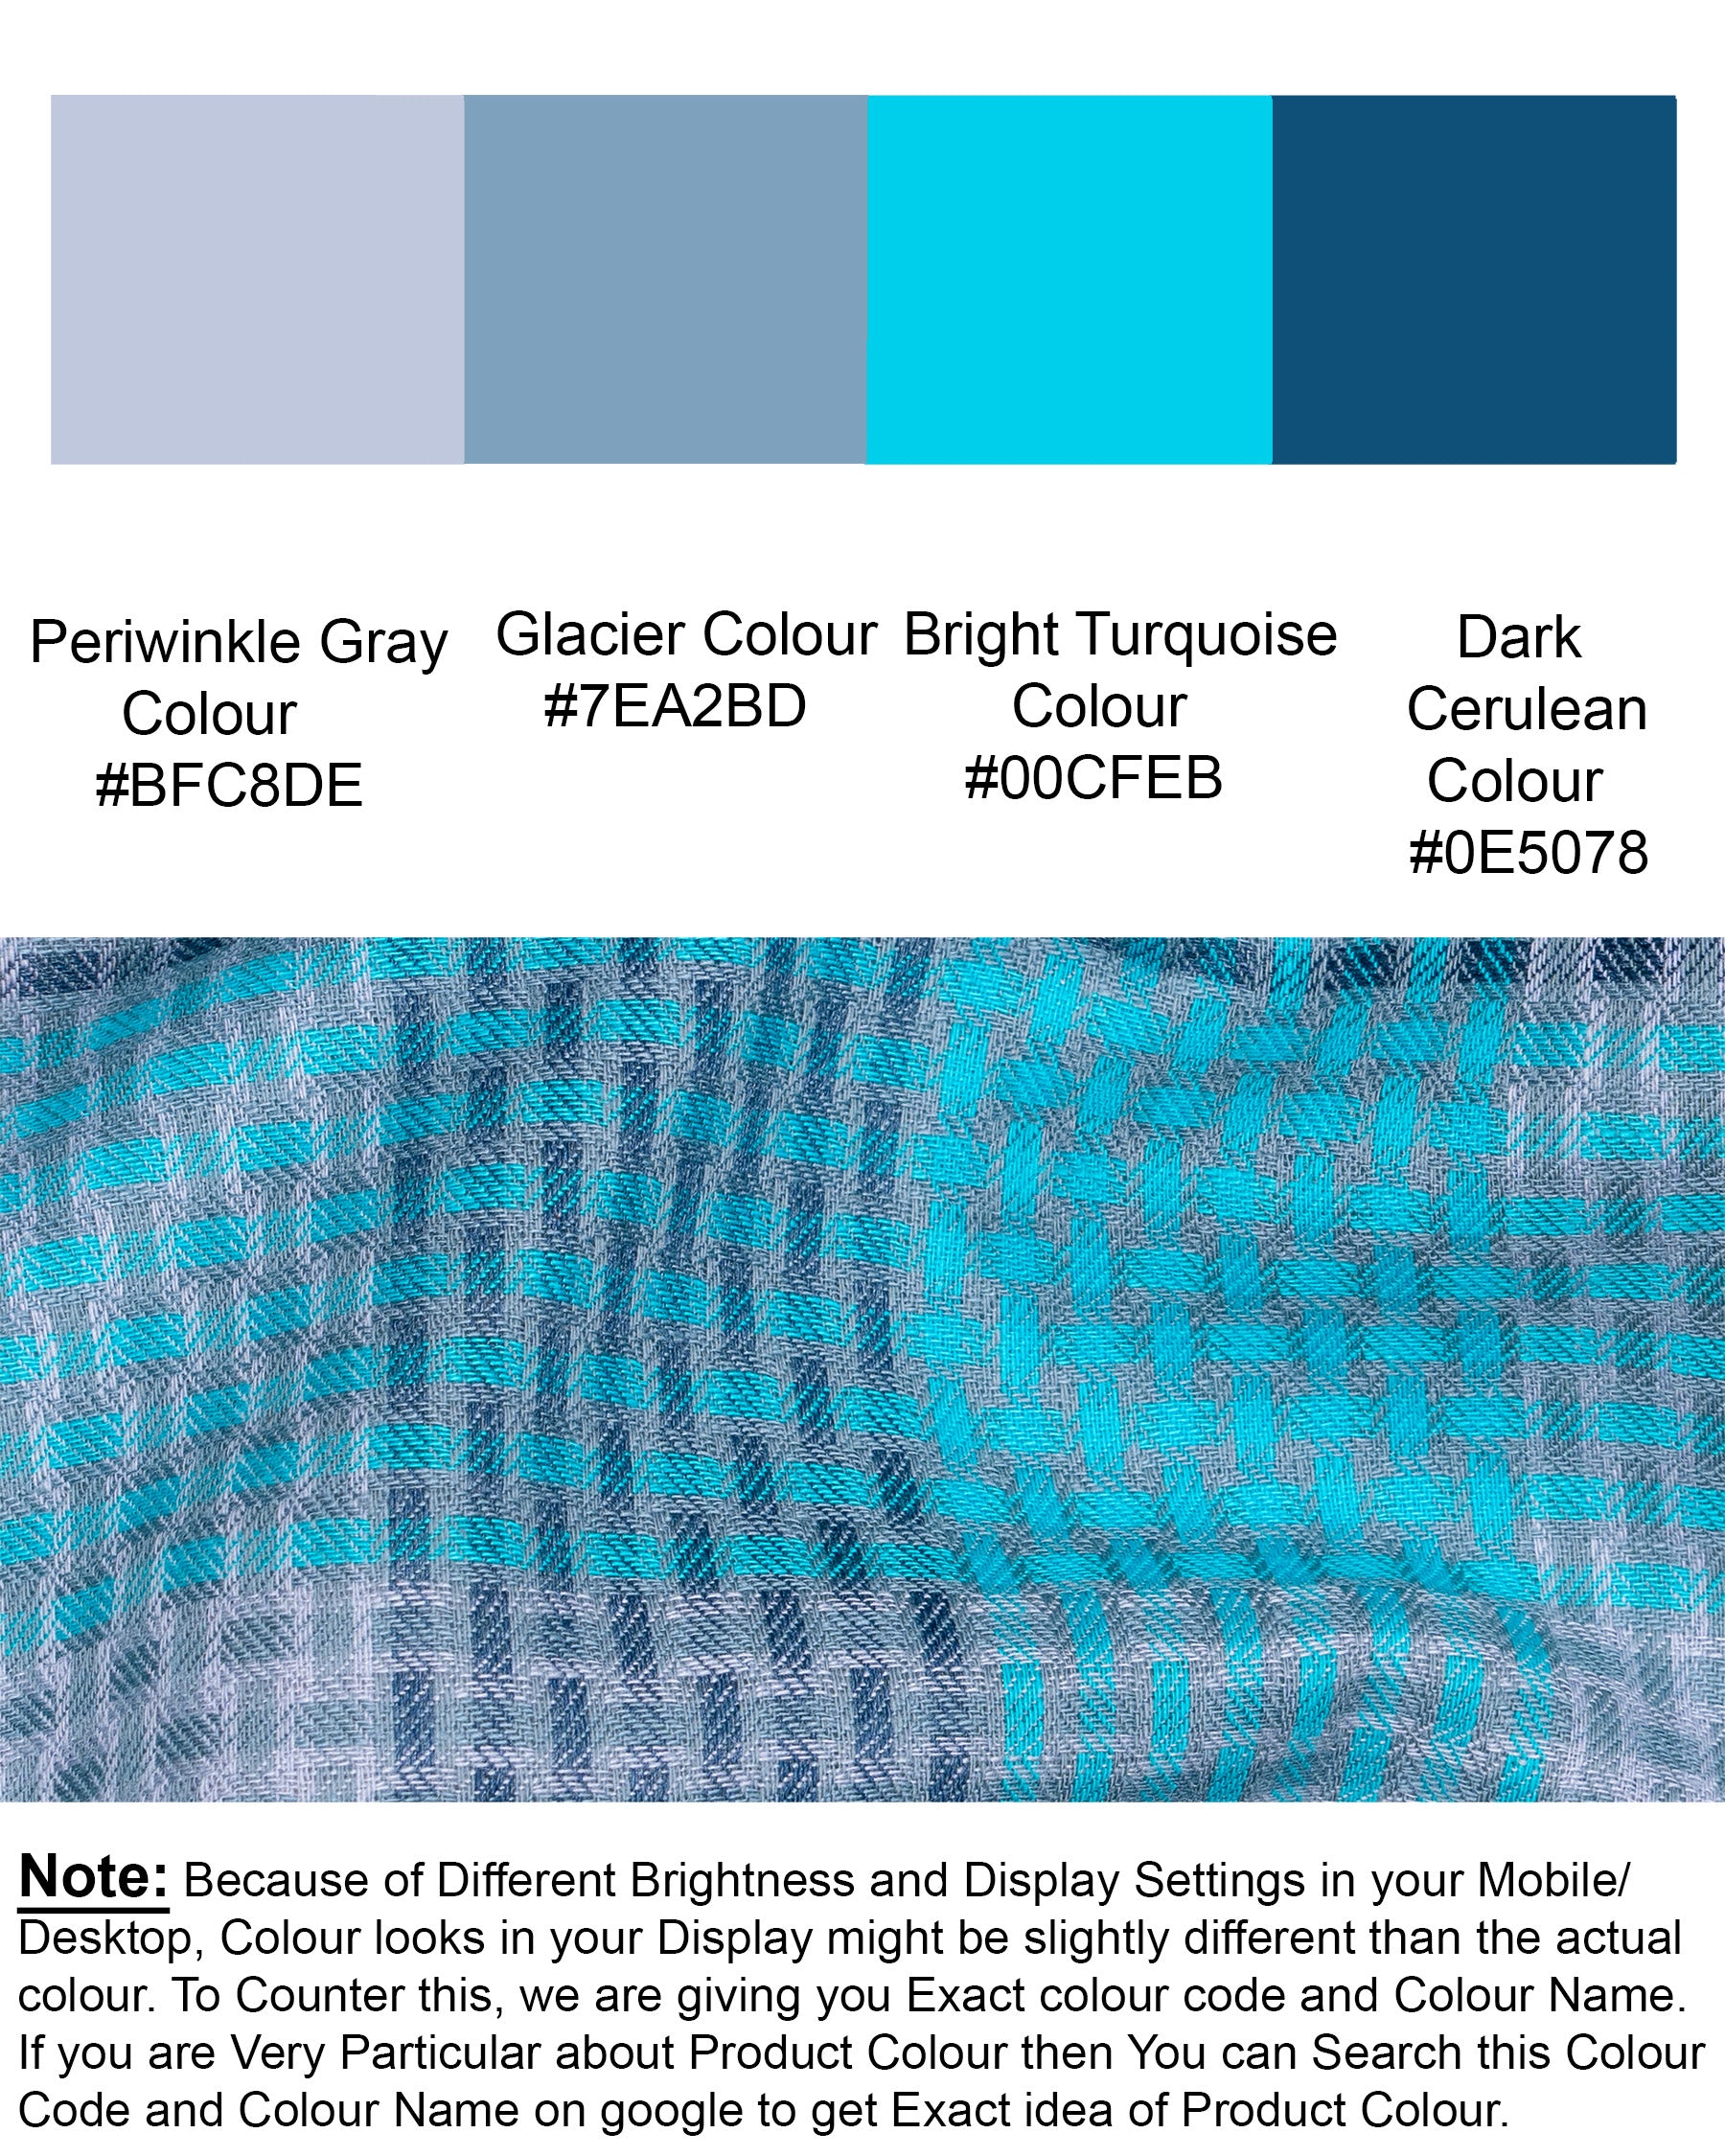 Bright Turquoise Blue and Dark Cerulean Twill Plaid Premium Cotton Shirt 5834-BD-BLE-38, 5834-BD-BLE-H-38, 5834-BD-BLE-39, 5834-BD-BLE-H-39, 5834-BD-BLE-40, 5834-BD-BLE-H-40, 5834-BD-BLE-42, 5834-BD-BLE-H-42, 5834-BD-BLE-44, 5834-BD-BLE-H-44, 5834-BD-BLE-46, 5834-BD-BLE-H-46, 5834-BD-BLE-48, 5834-BD-BLE-H-48, 5834-BD-BLE-50, 5834-BD-BLE-H-50, 5834-BD-BLE-52, 5834-BD-BLE-H-52